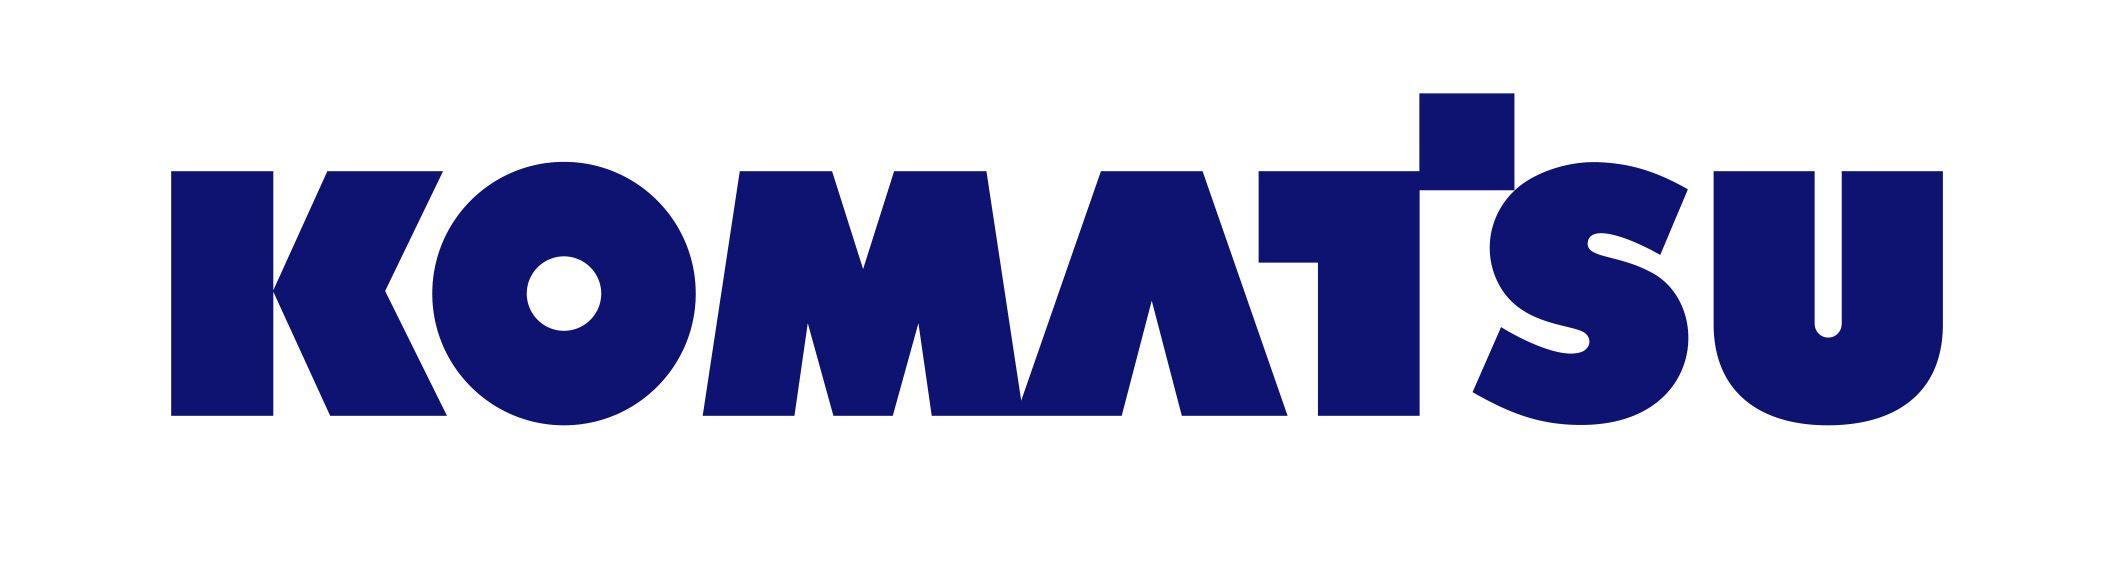 Komatsu Equipment Logo - Komatsu UK Ltd - CEA: Construction Equipment Association